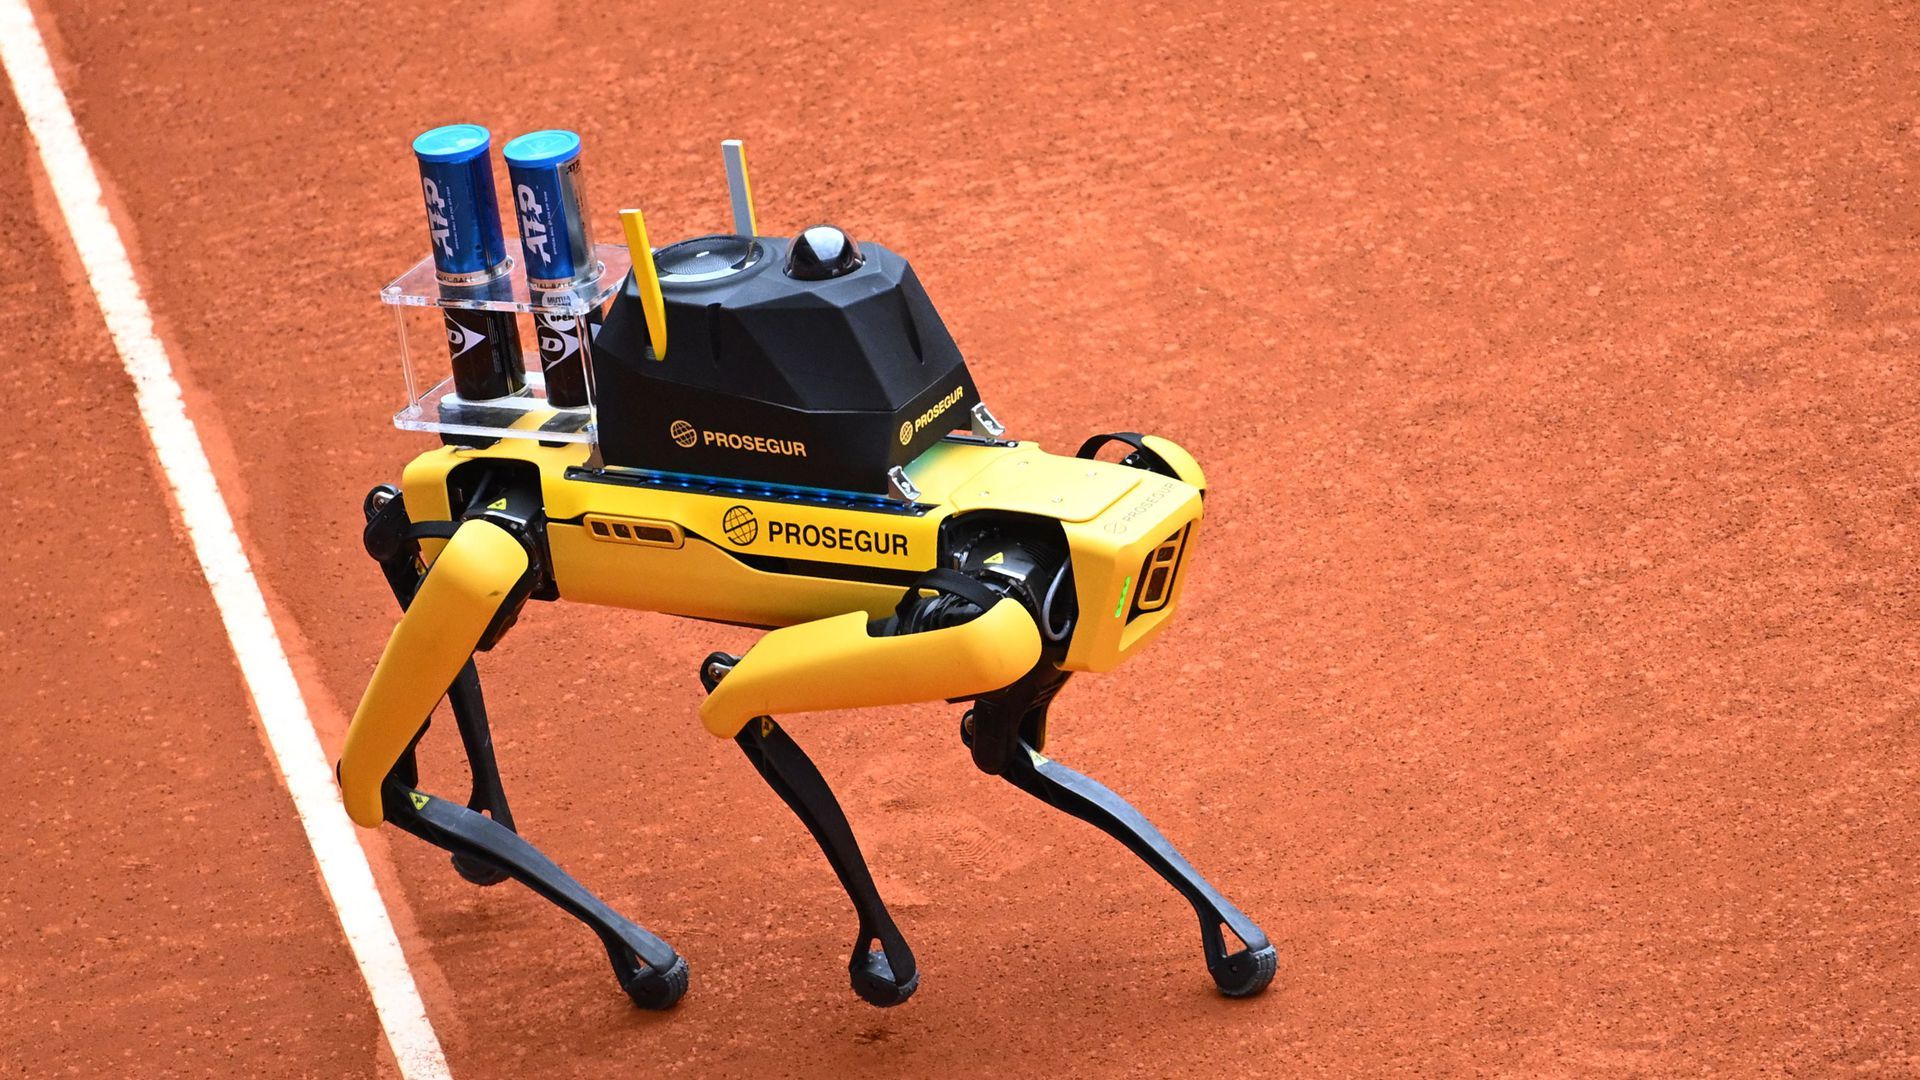 A robotic dog carries tennis balls at the 2022 ATP Tour Madrid Open.